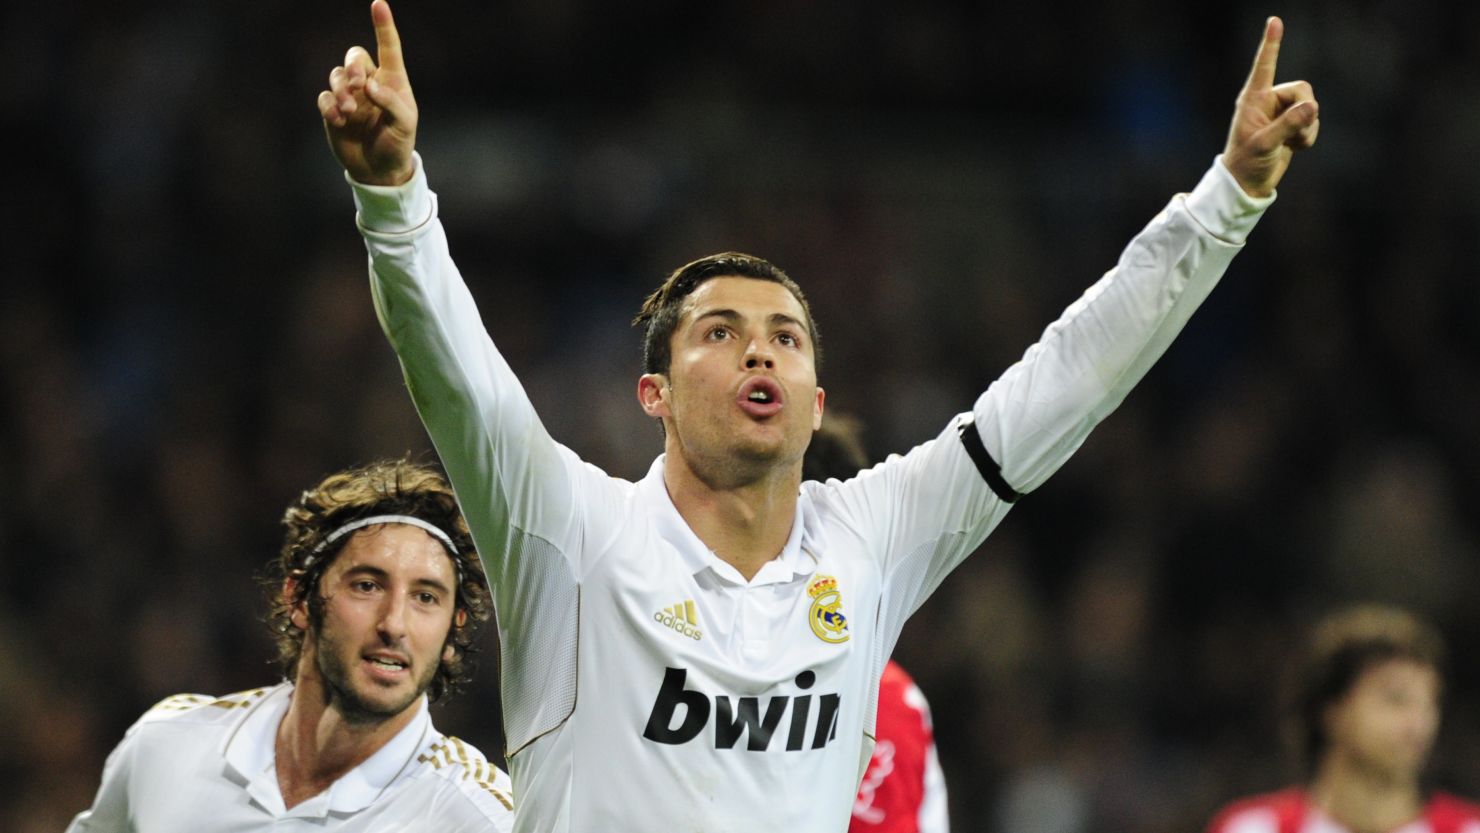 Cristiano Ronaldo scored twice as Real Madrid beat Athletic Bilbao 4-1 in Spain's La Liga.